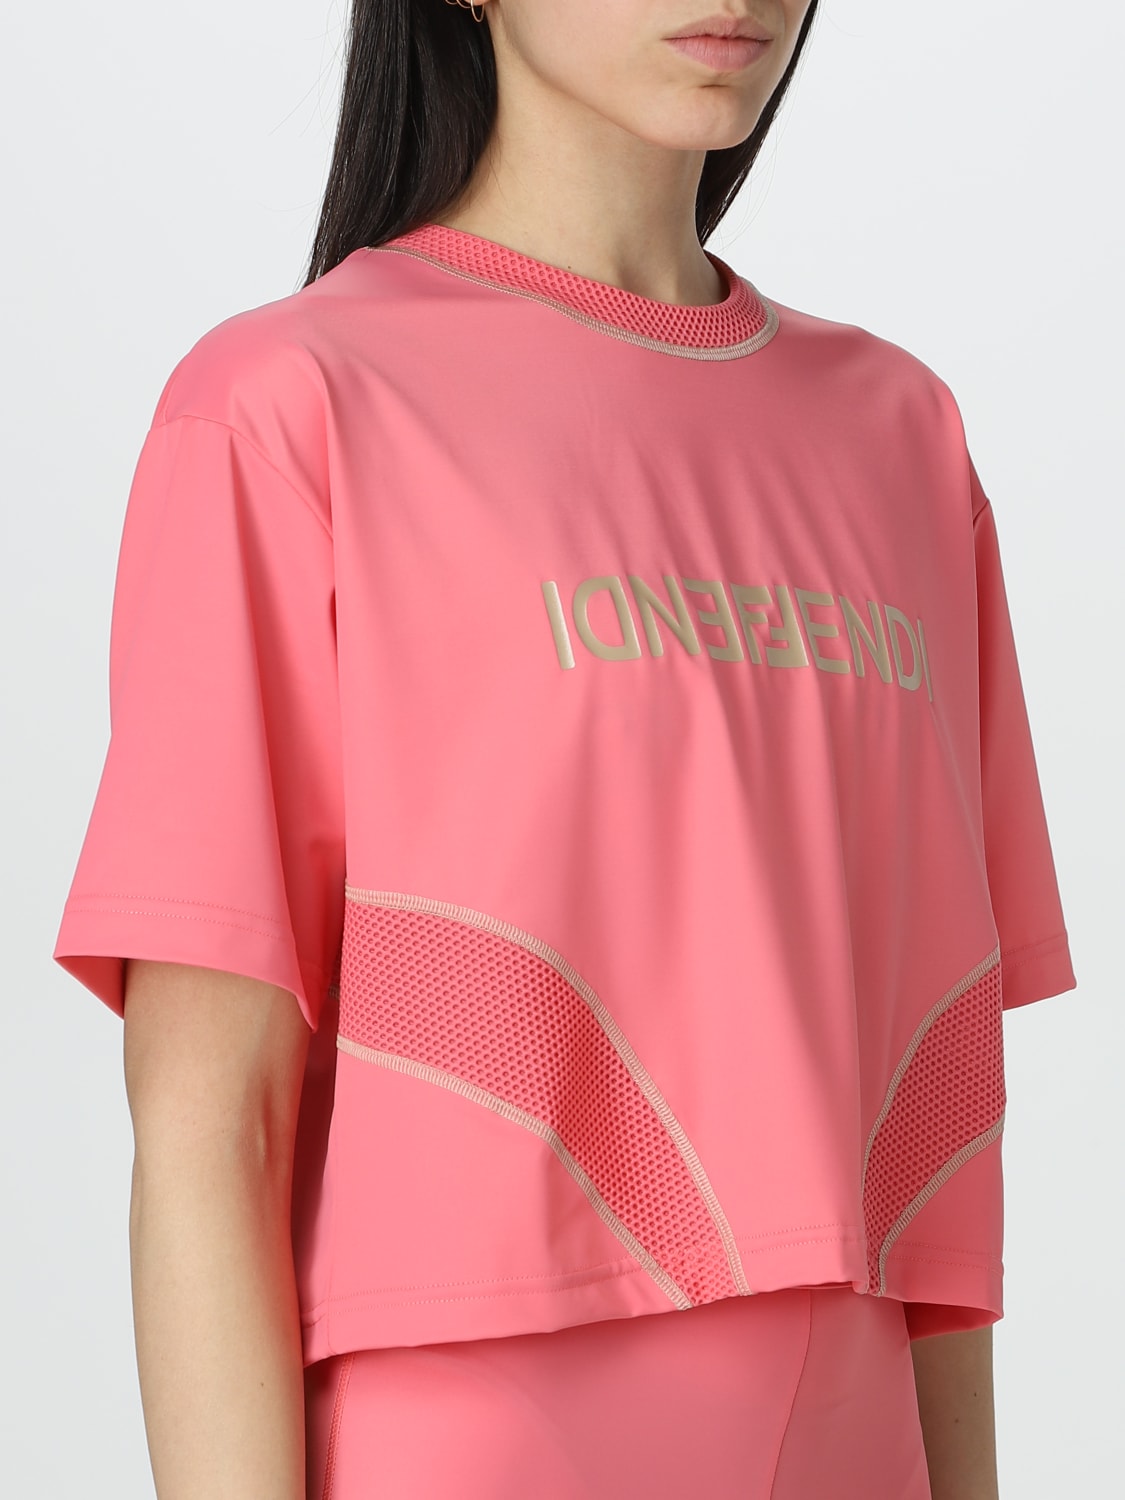 FENDI: Camiseta para mujer, | Camiseta Fendi FAF318AK9D en línea GIGLIO.COM